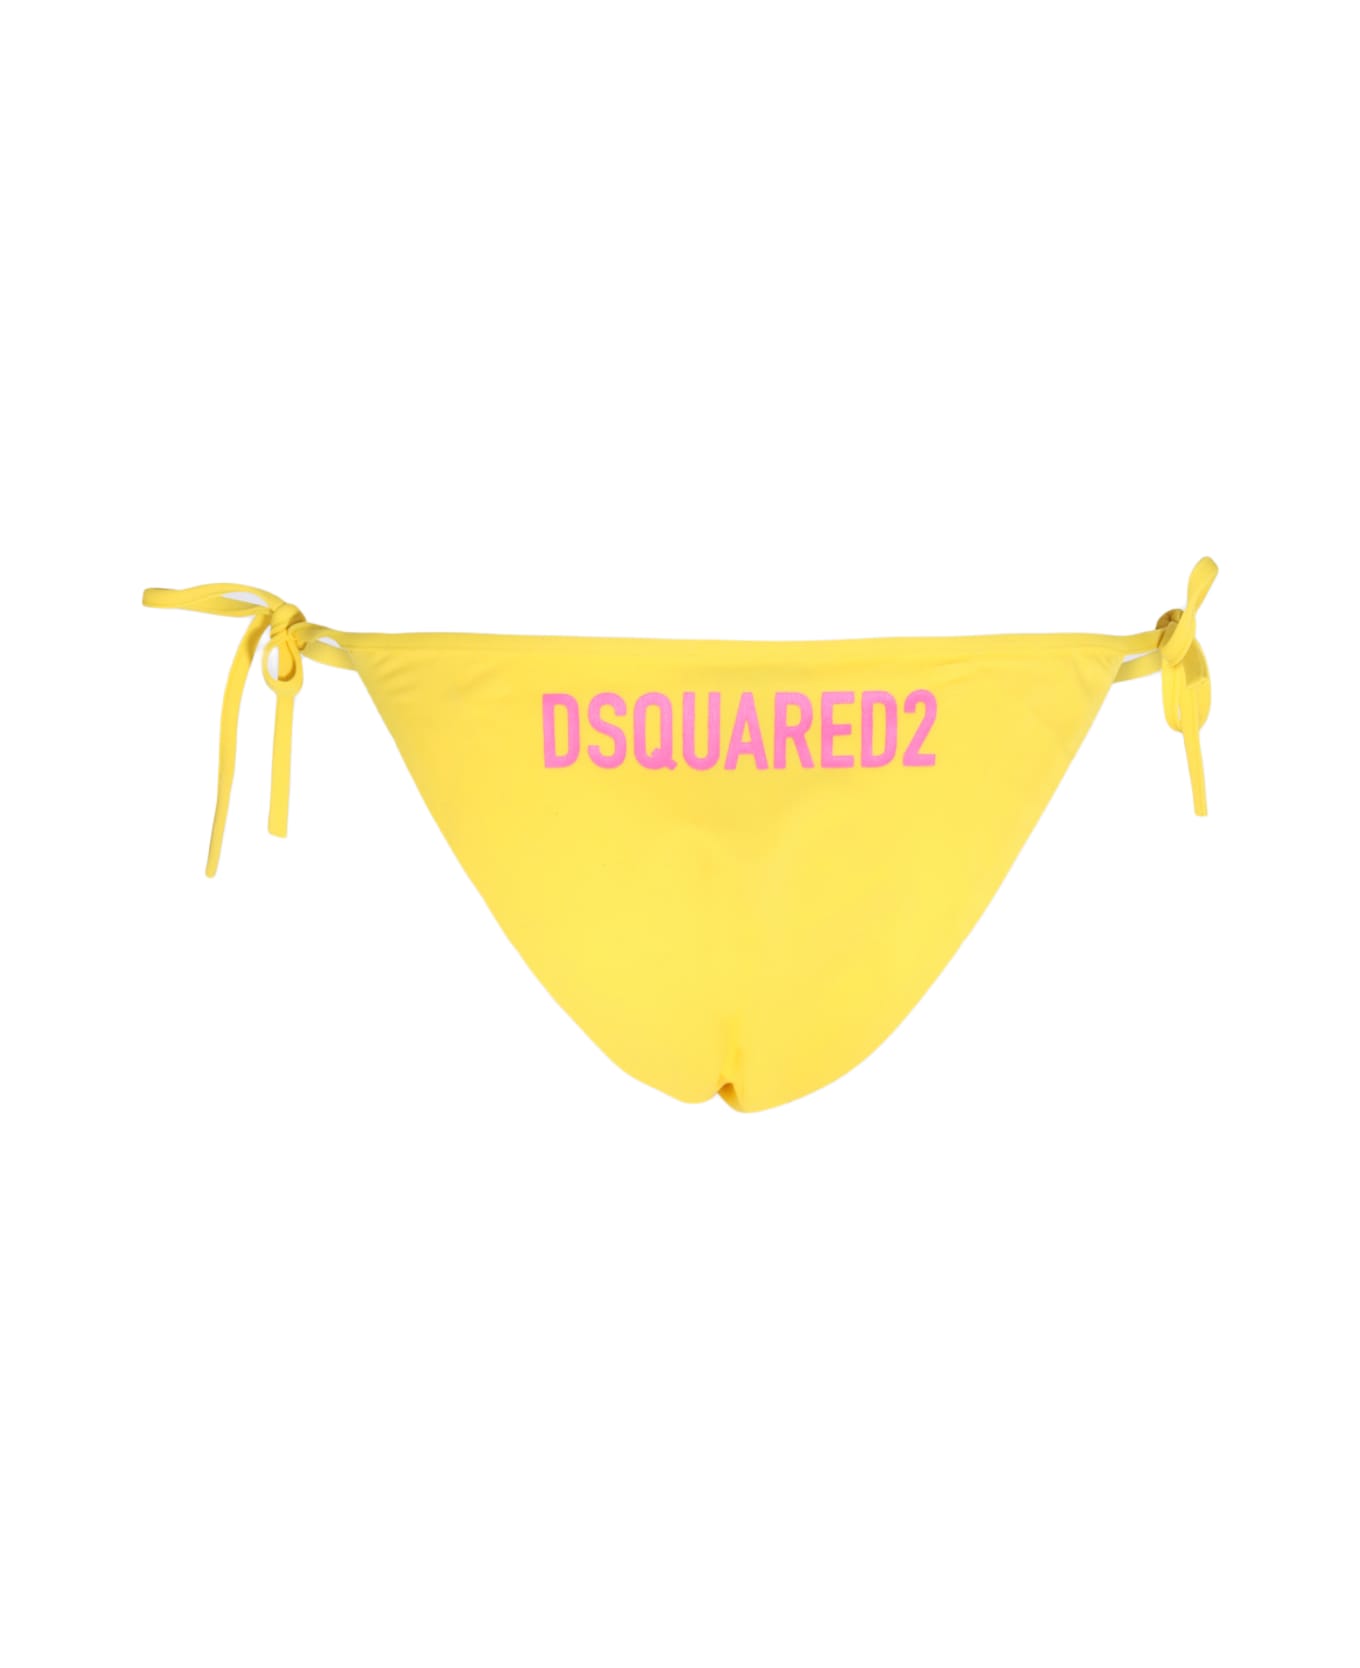 Dsquared2 Yellow Bikini Bottoms - Yellow